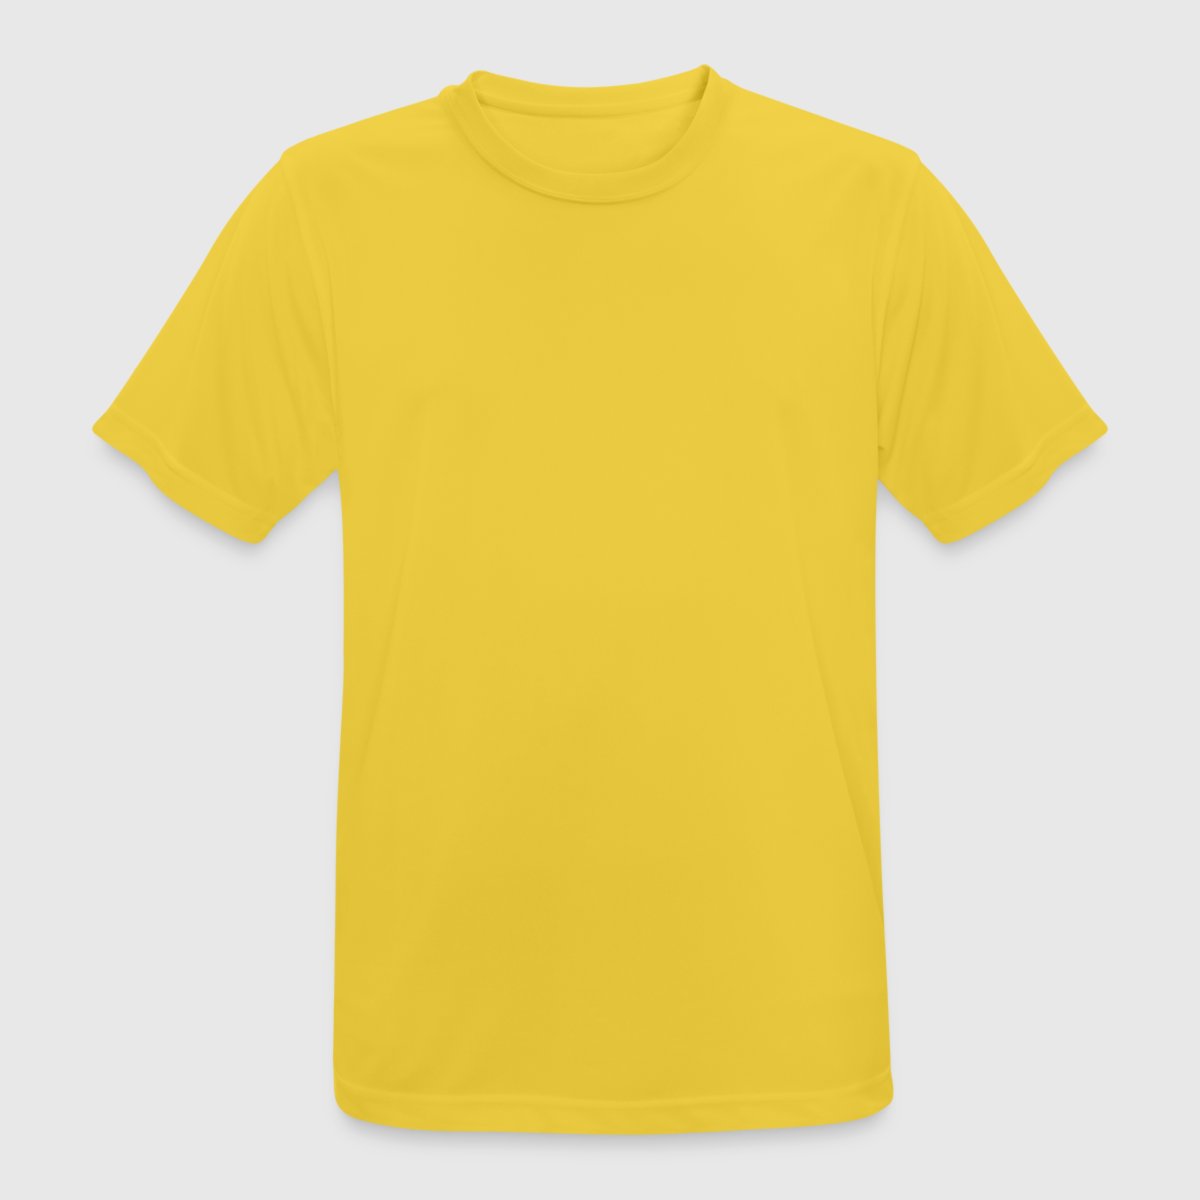 Männer T-Shirt atmungsaktiv - Vorne